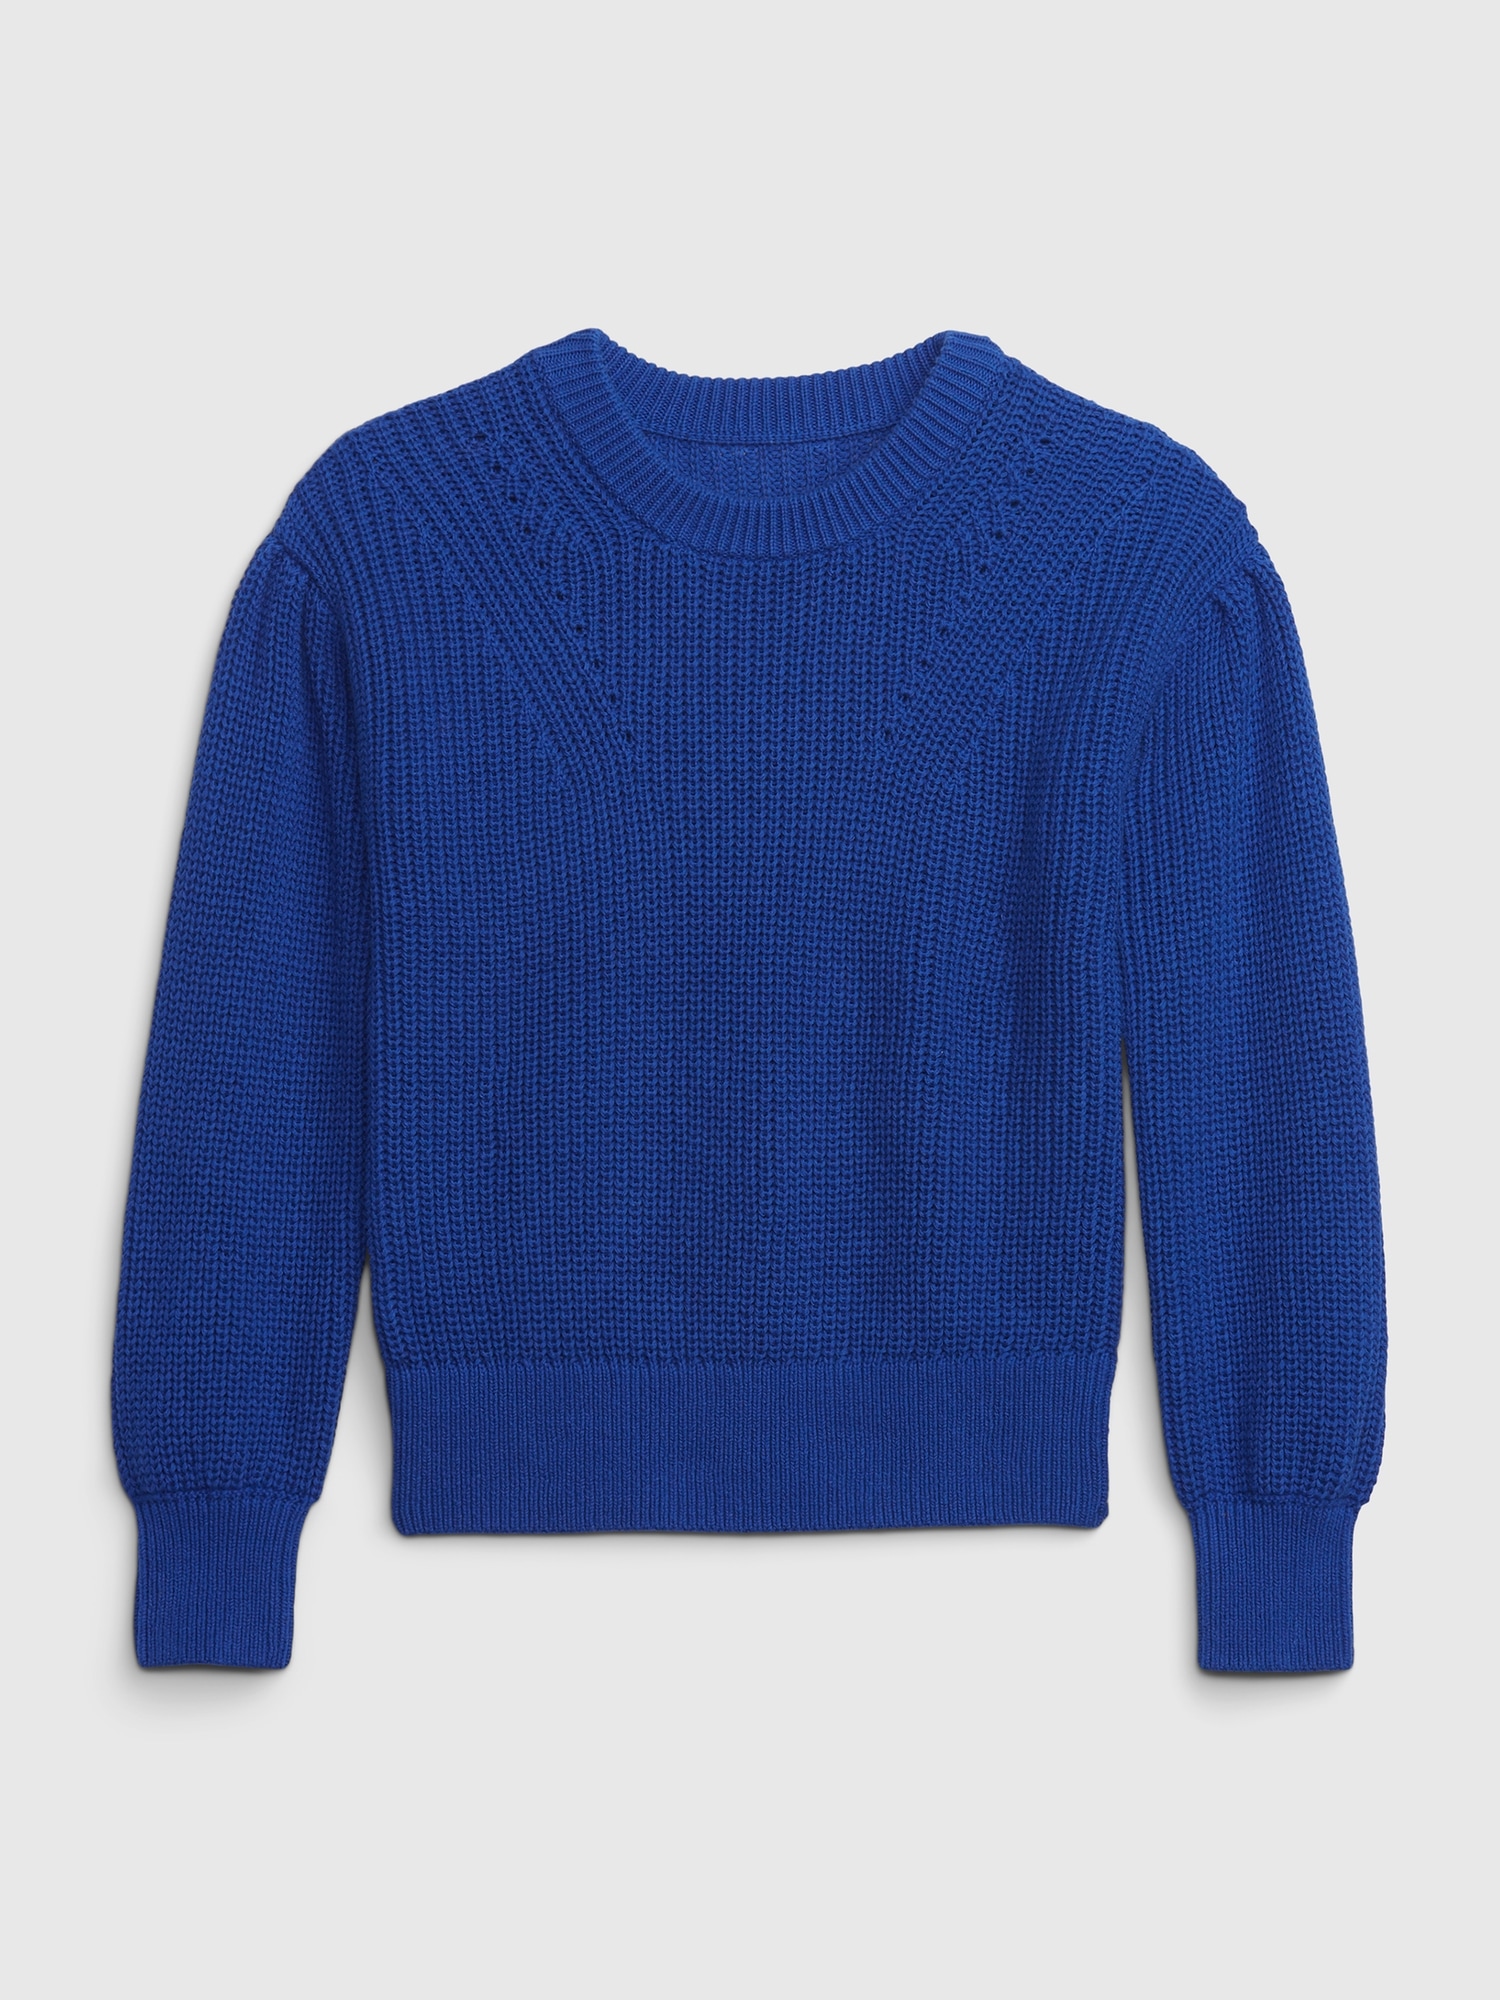 Gap Kids Shaker-Stitch Sweater blue. 1